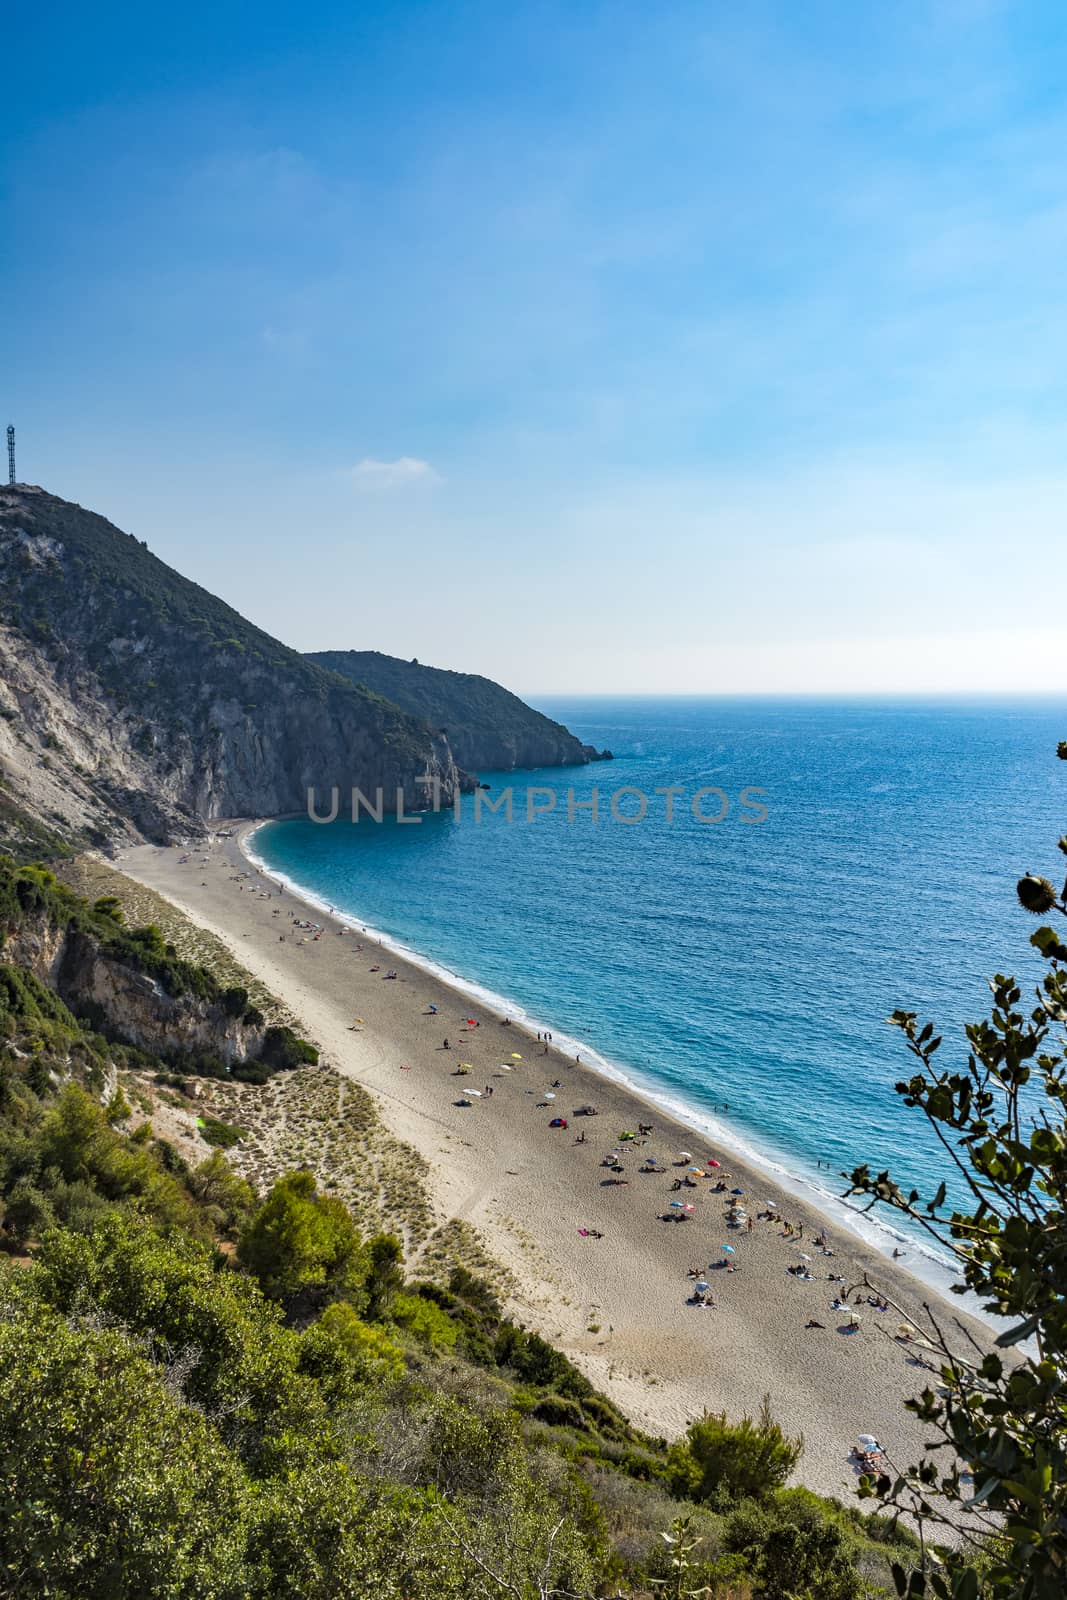 Mylos beach in lefkada, Greece by ankarb